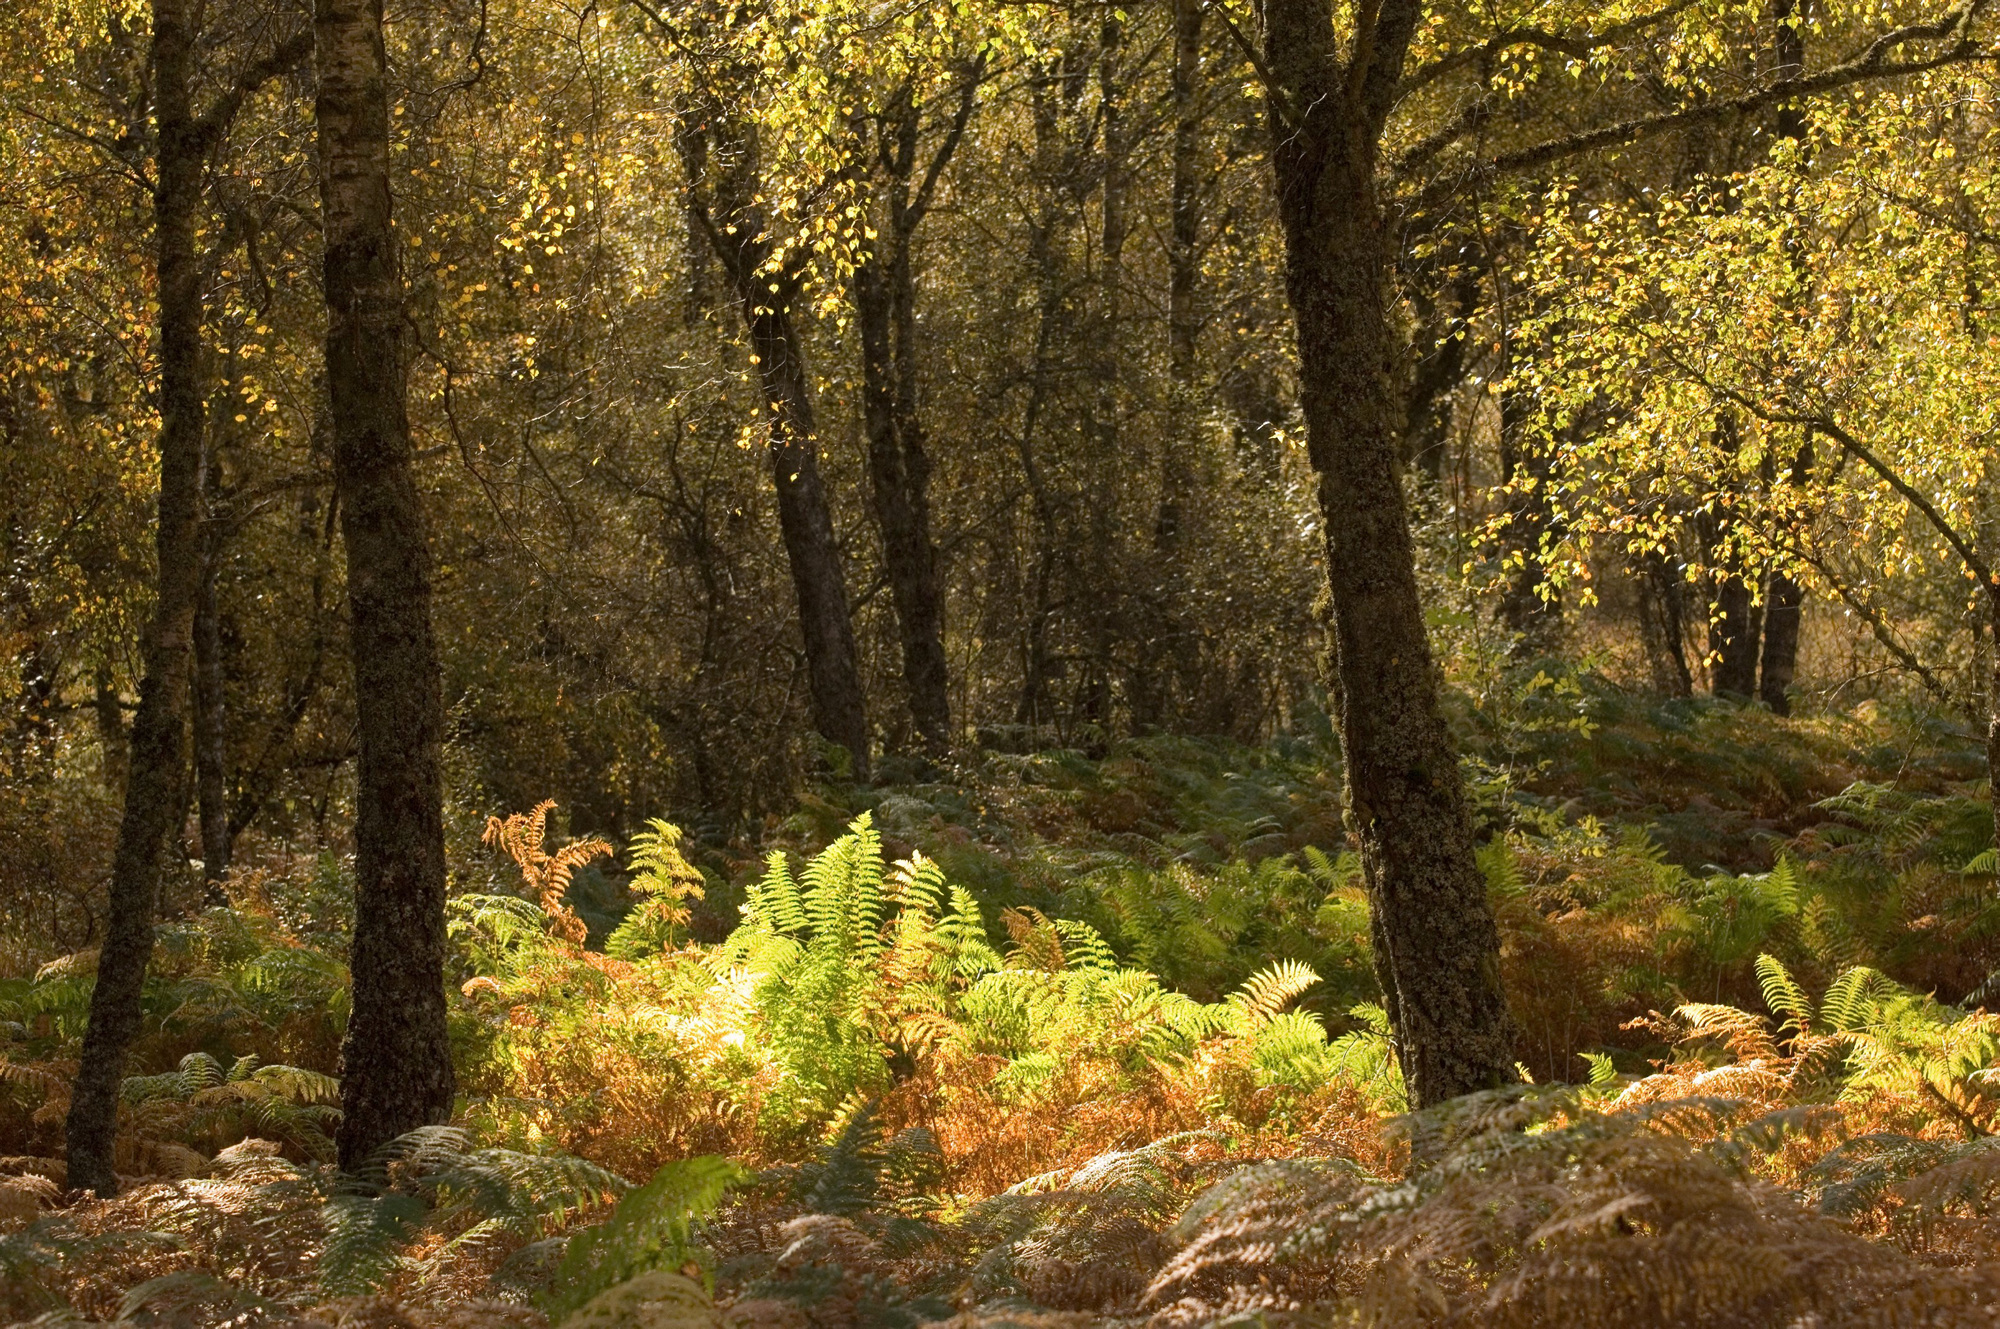 www.forestryengland.uk